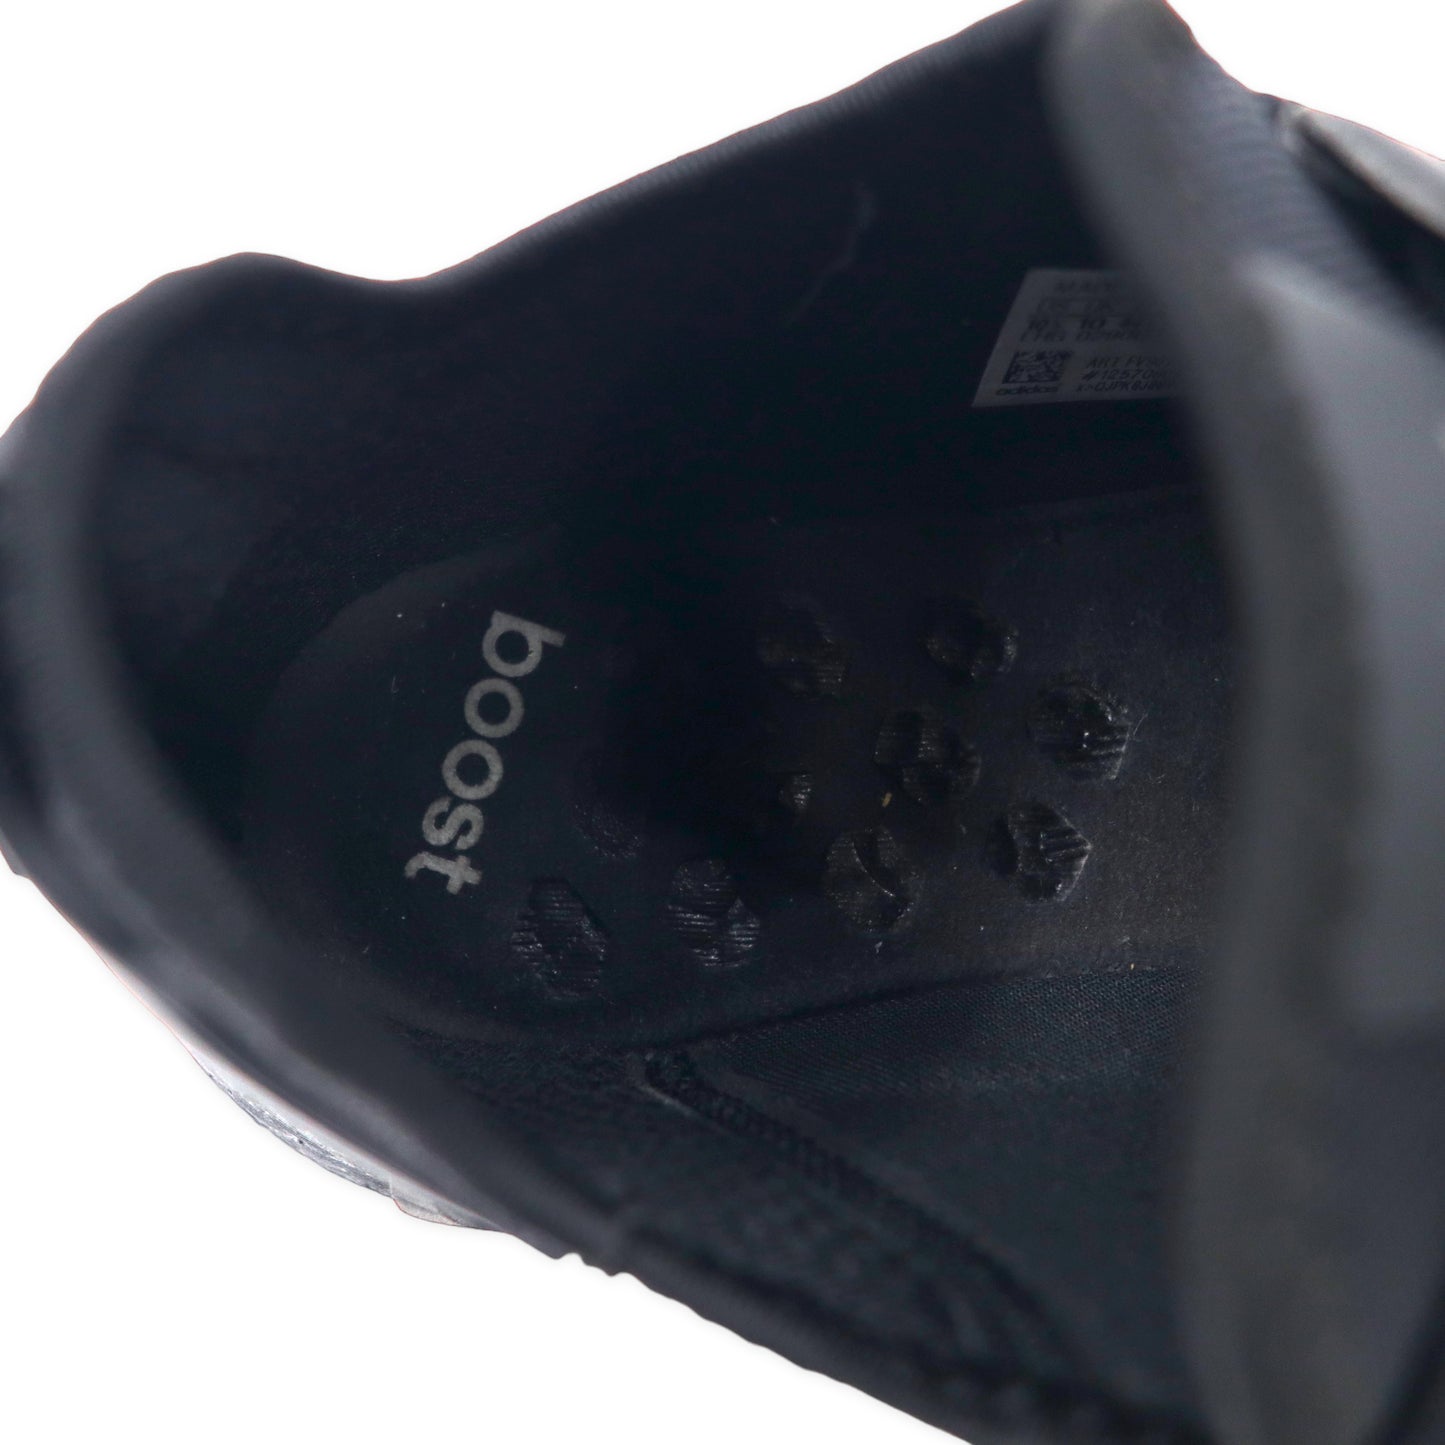 adidas originals NMD R1 CORE BLACK スニーカー 28.5cm ブラック FV9015 エヌエムディー R1 コアブラック